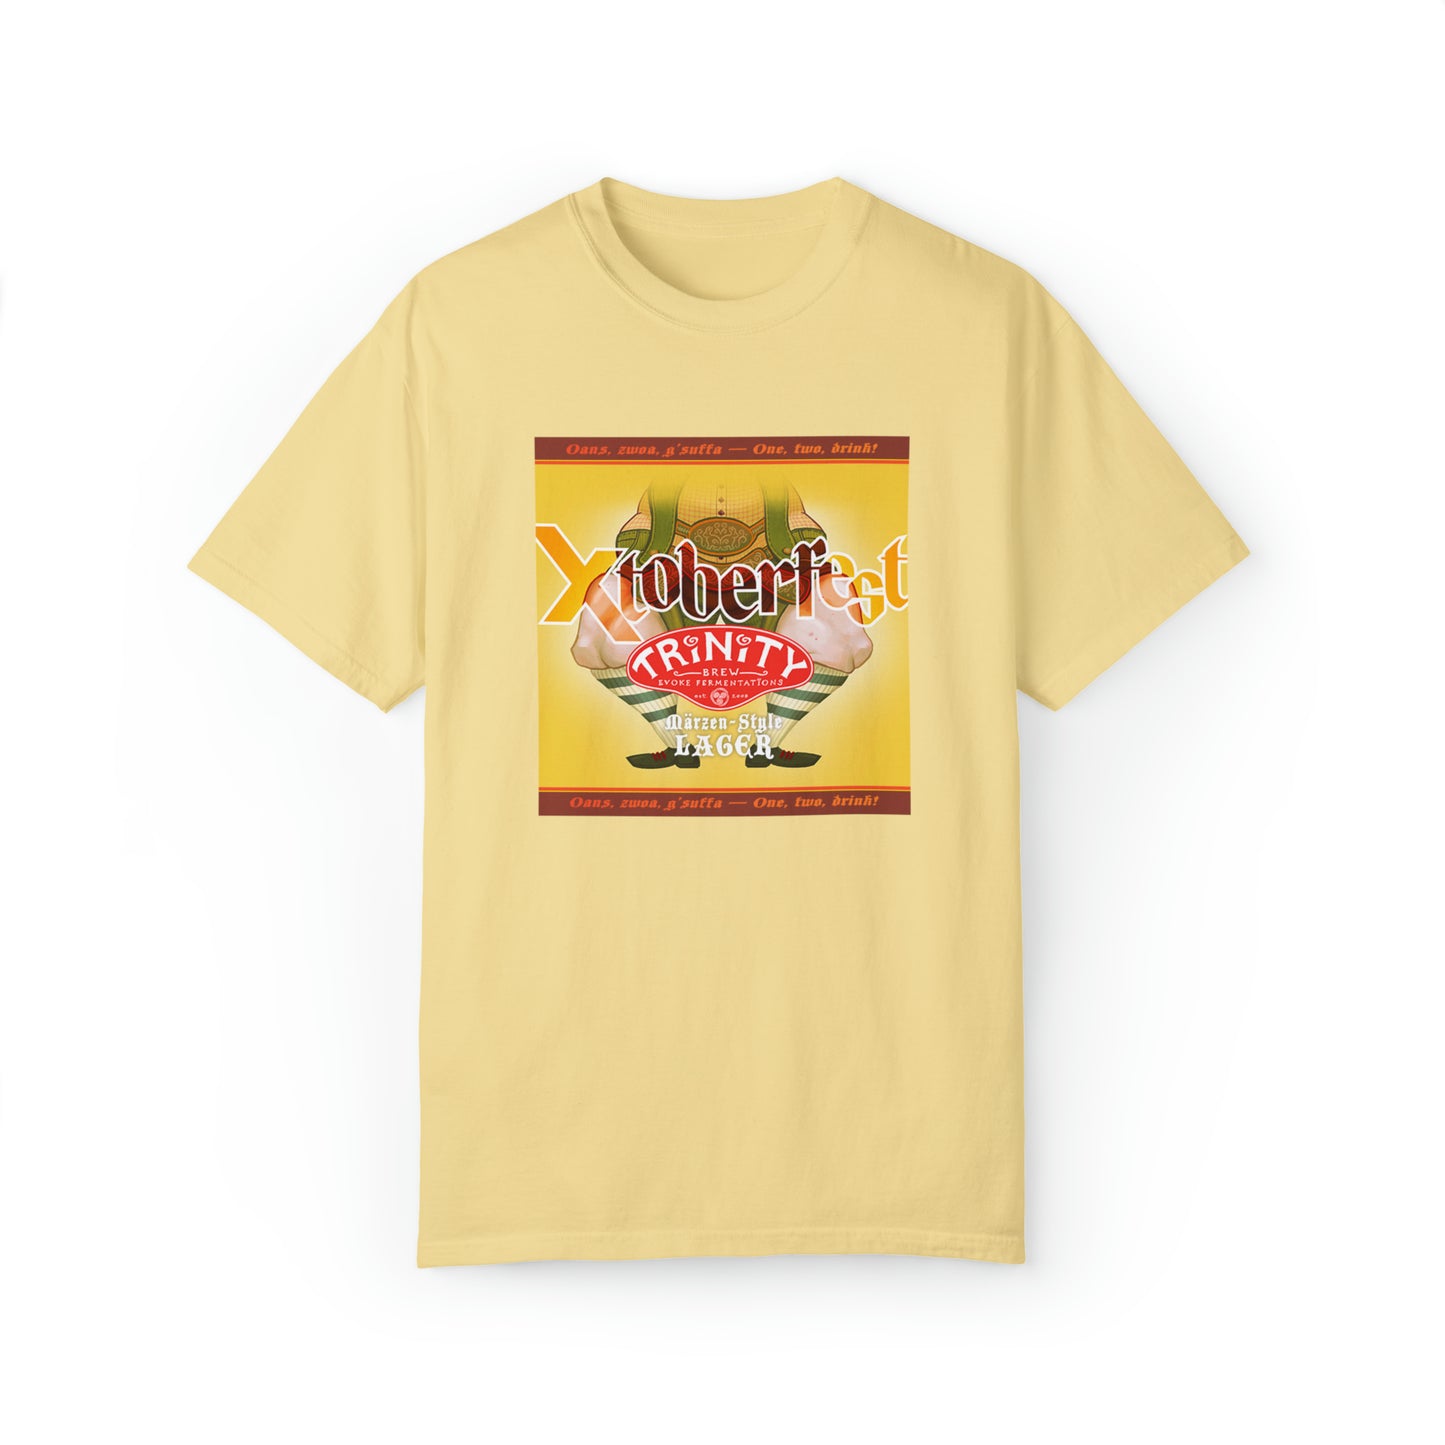 TRiNiTY Xtoberfest! T-Shirt (Lighter Colors) Oktoberfest Bier - Unisex Garment-Dyed T-shirt